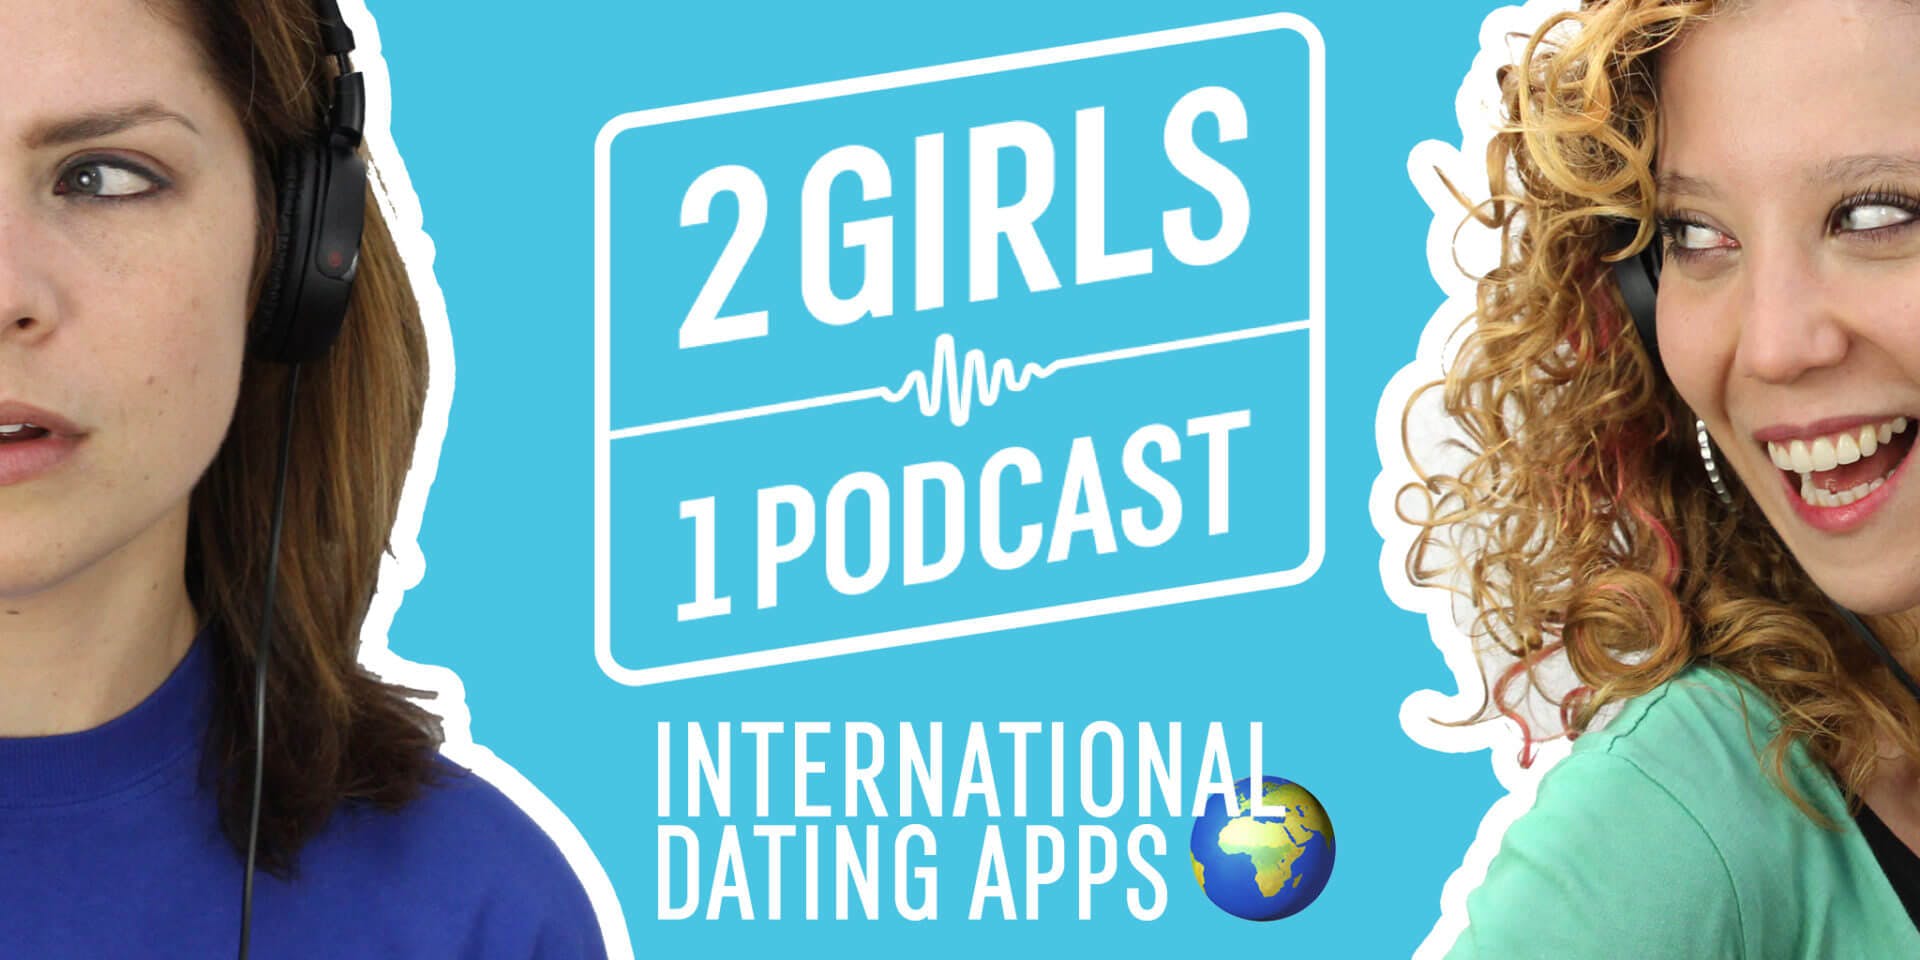 Free international dating apps